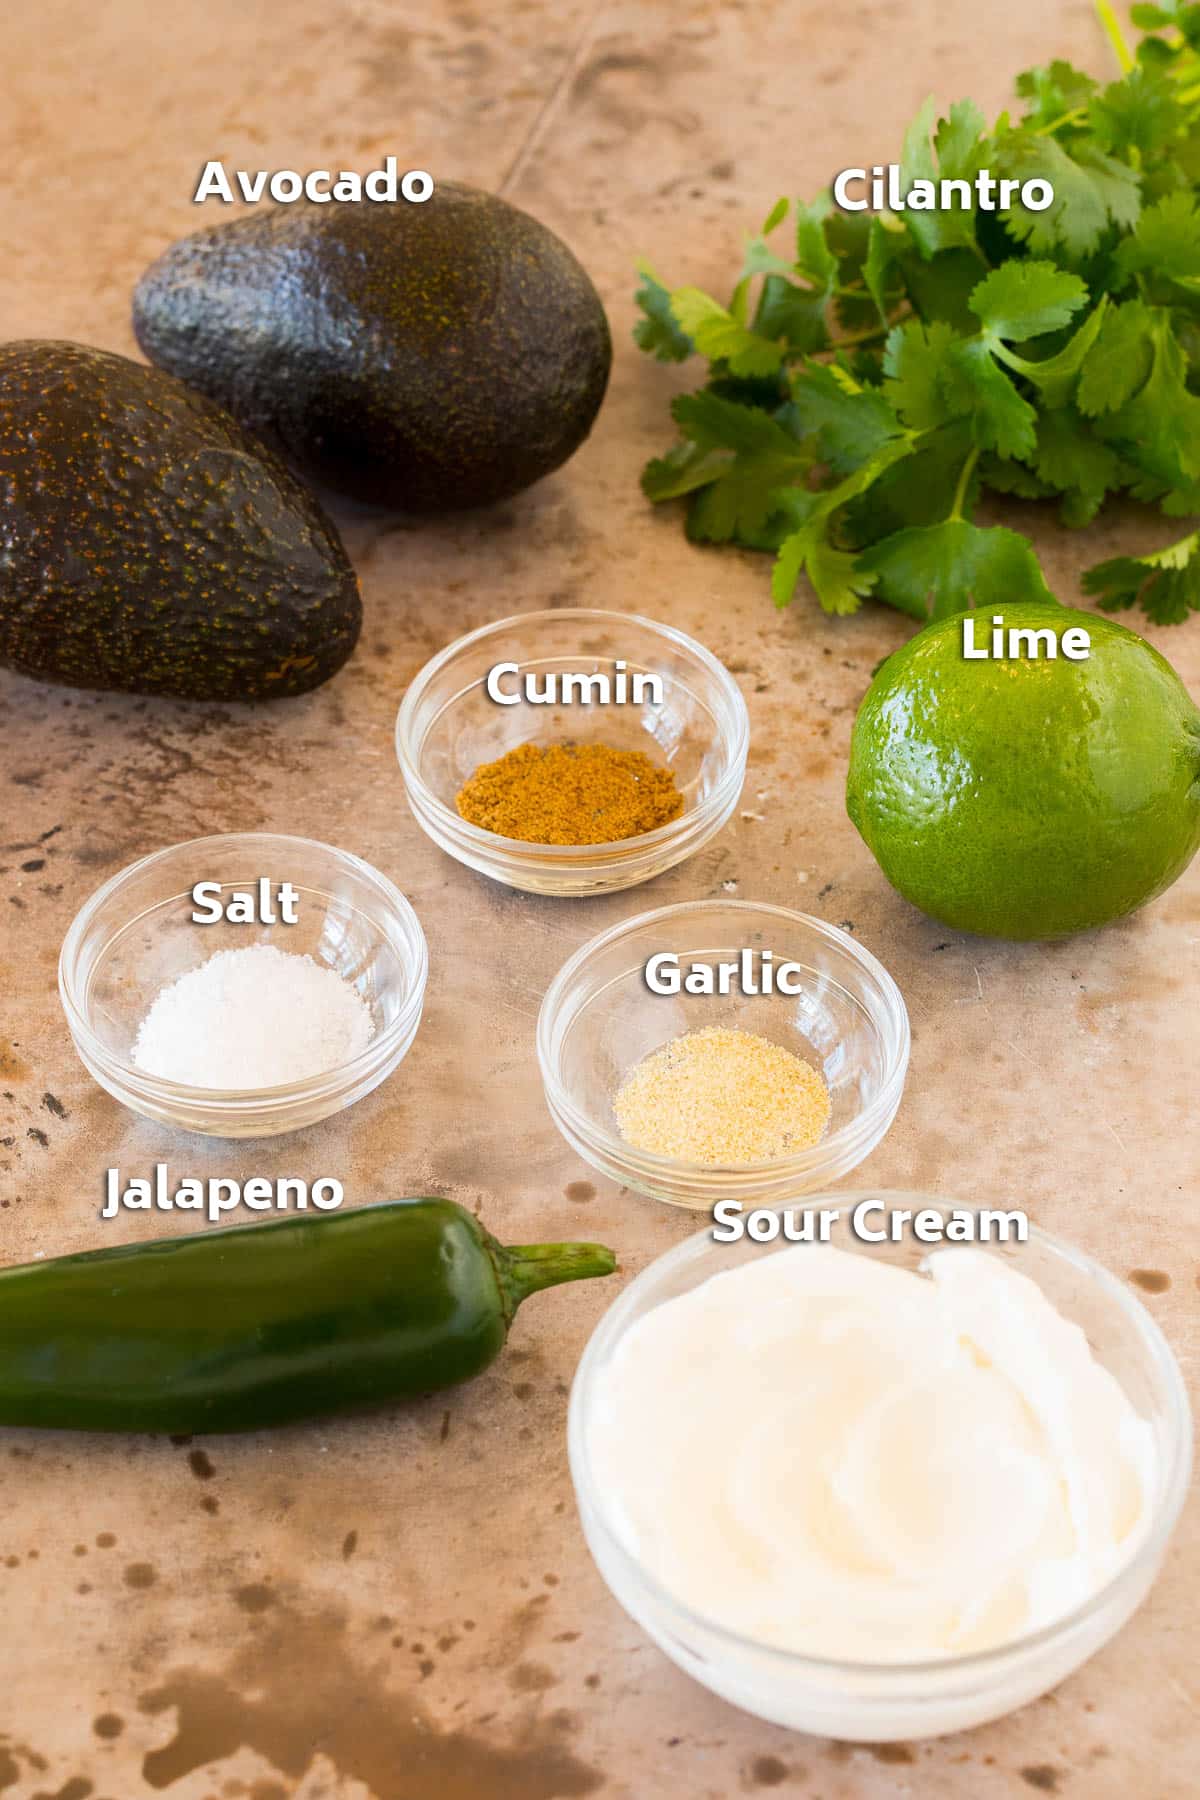 Ingredients including avocado, sour cream, jalapeno and cilantro.